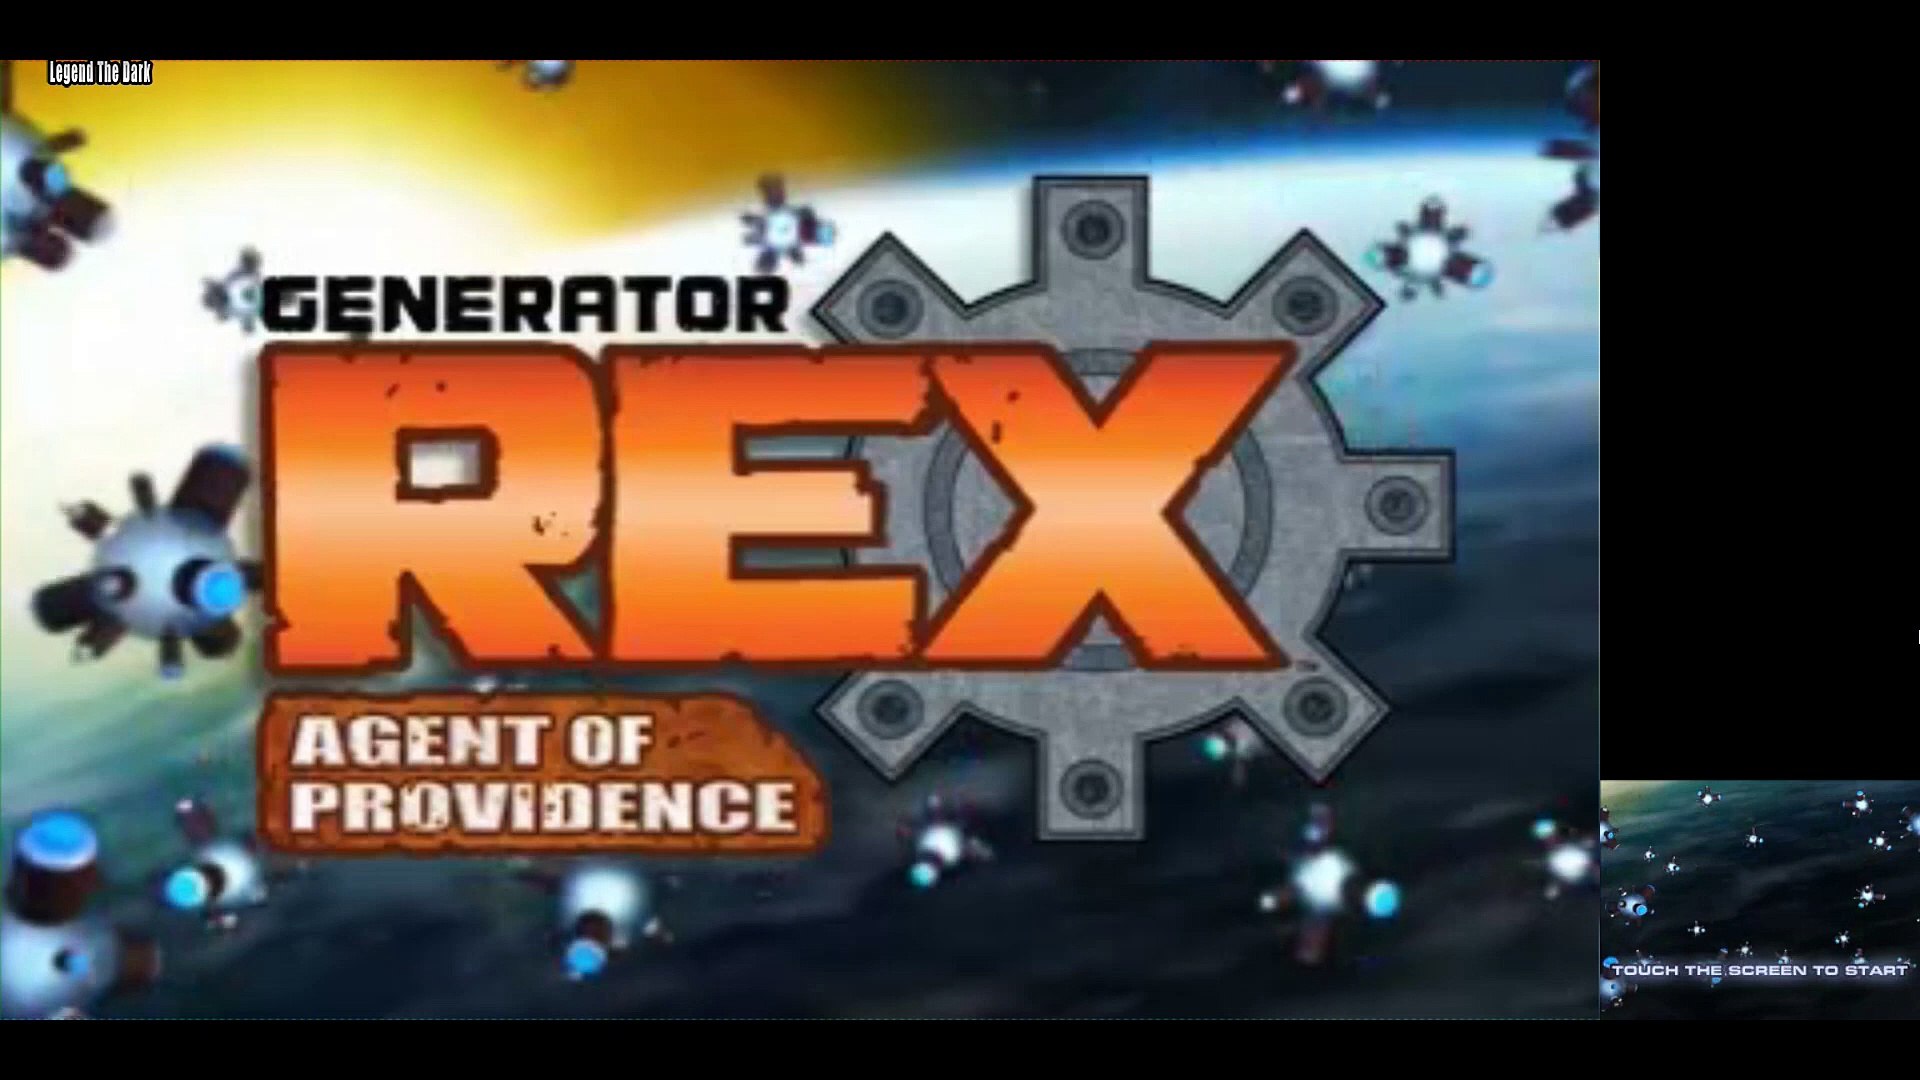 Screens: Generator Rex: Agent of Providence